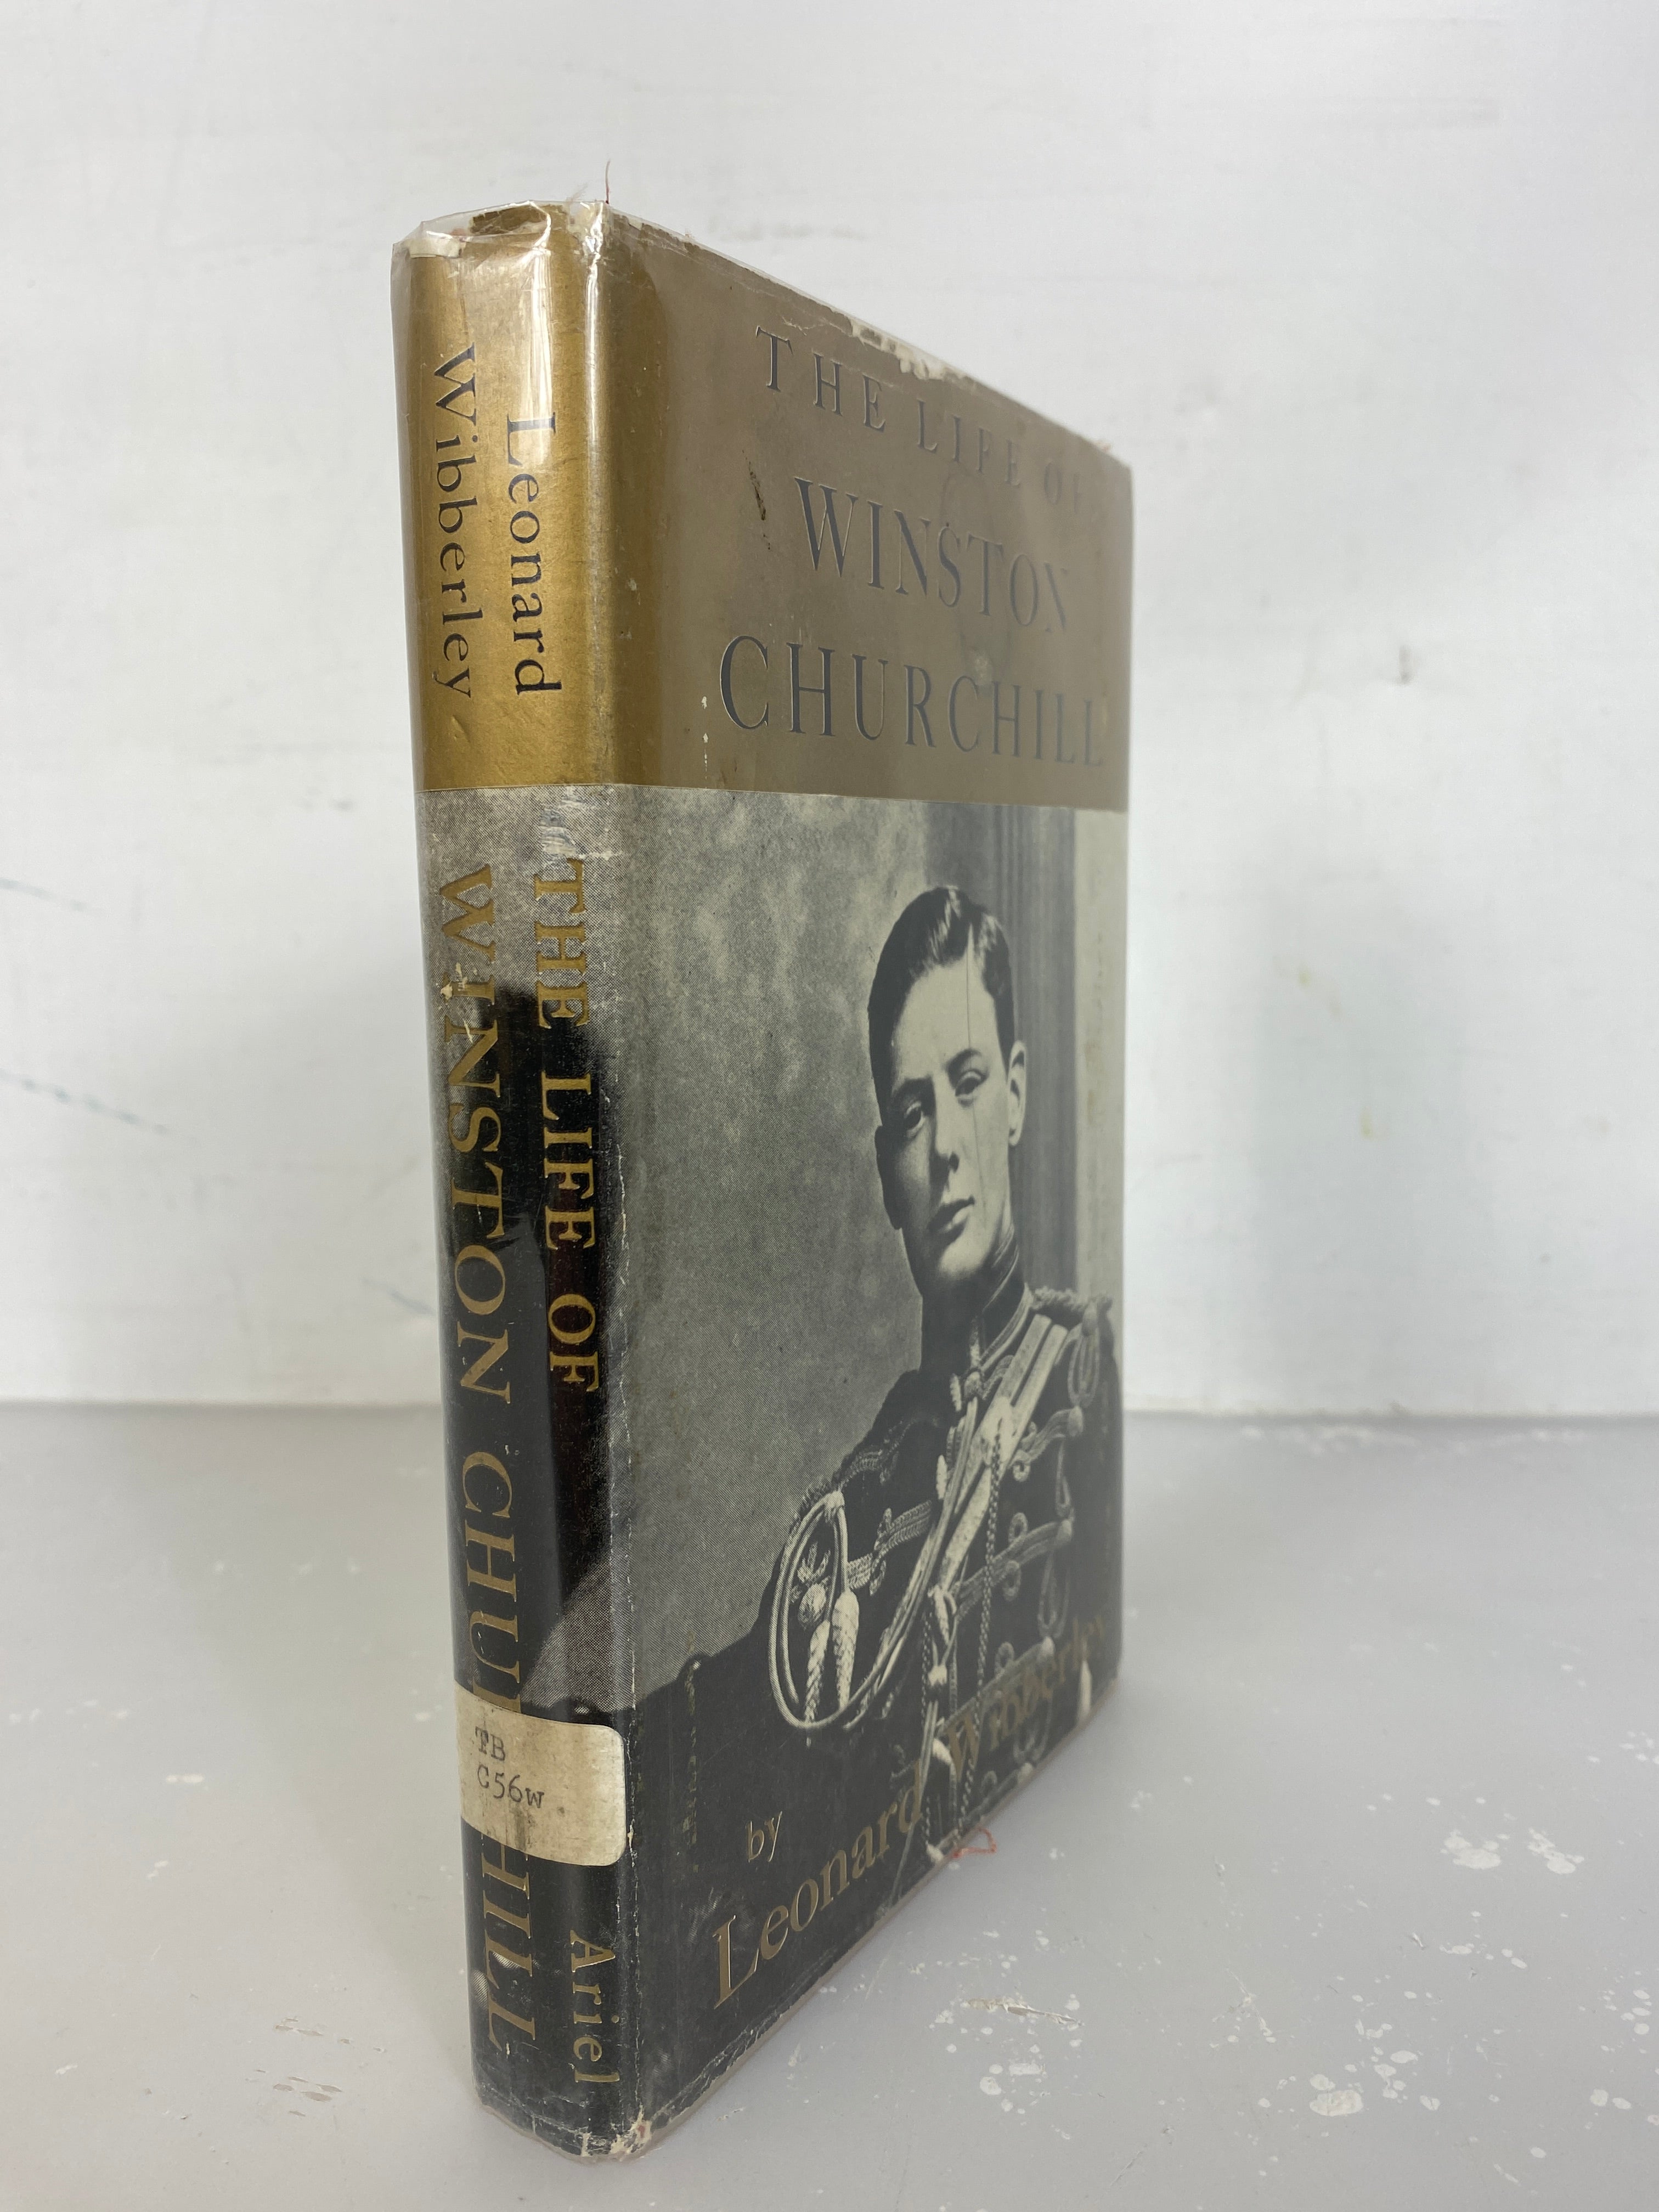 Rare First Printing The Life of Winston Churchill by Leonard Wibberley 1956 HC DJ